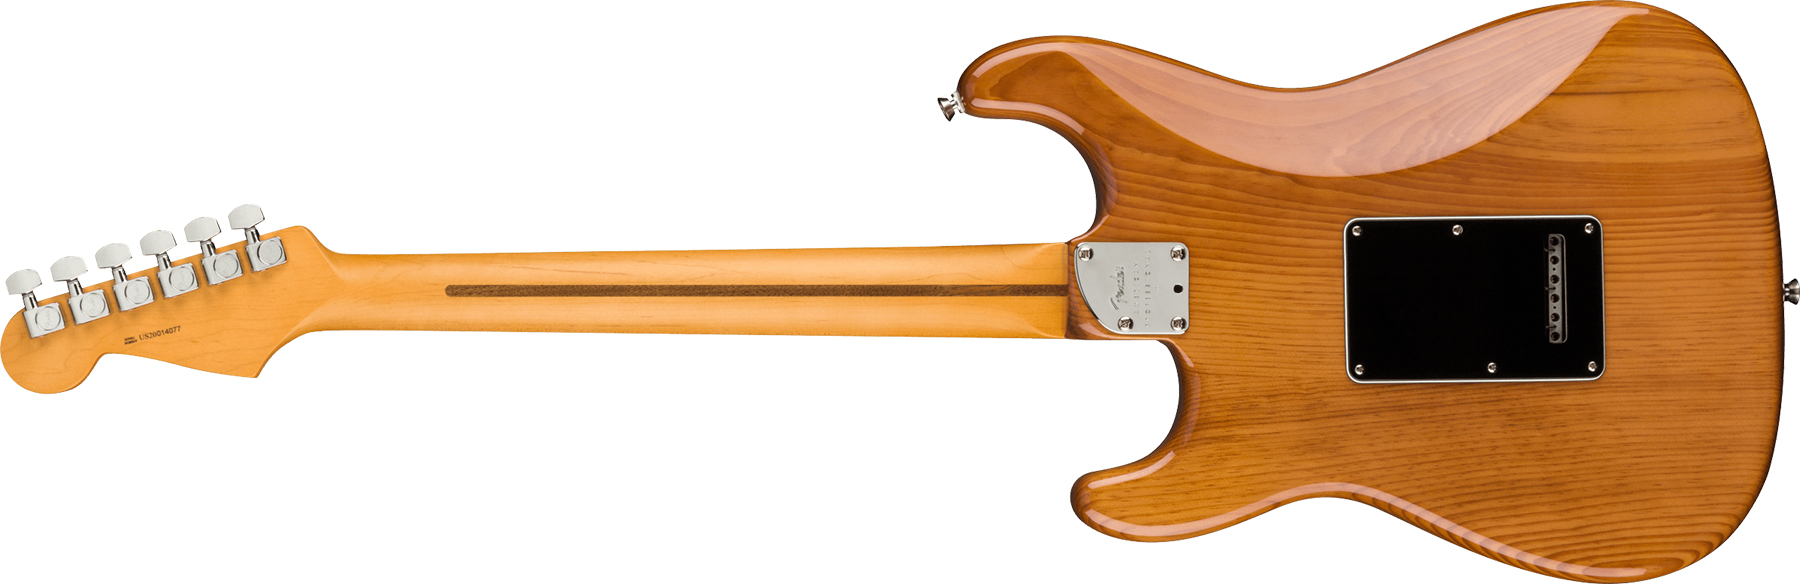 Fender Strat American Professional Ii Usa Rw - Roasted Pine - E-Gitarre in Str-Form - Variation 1